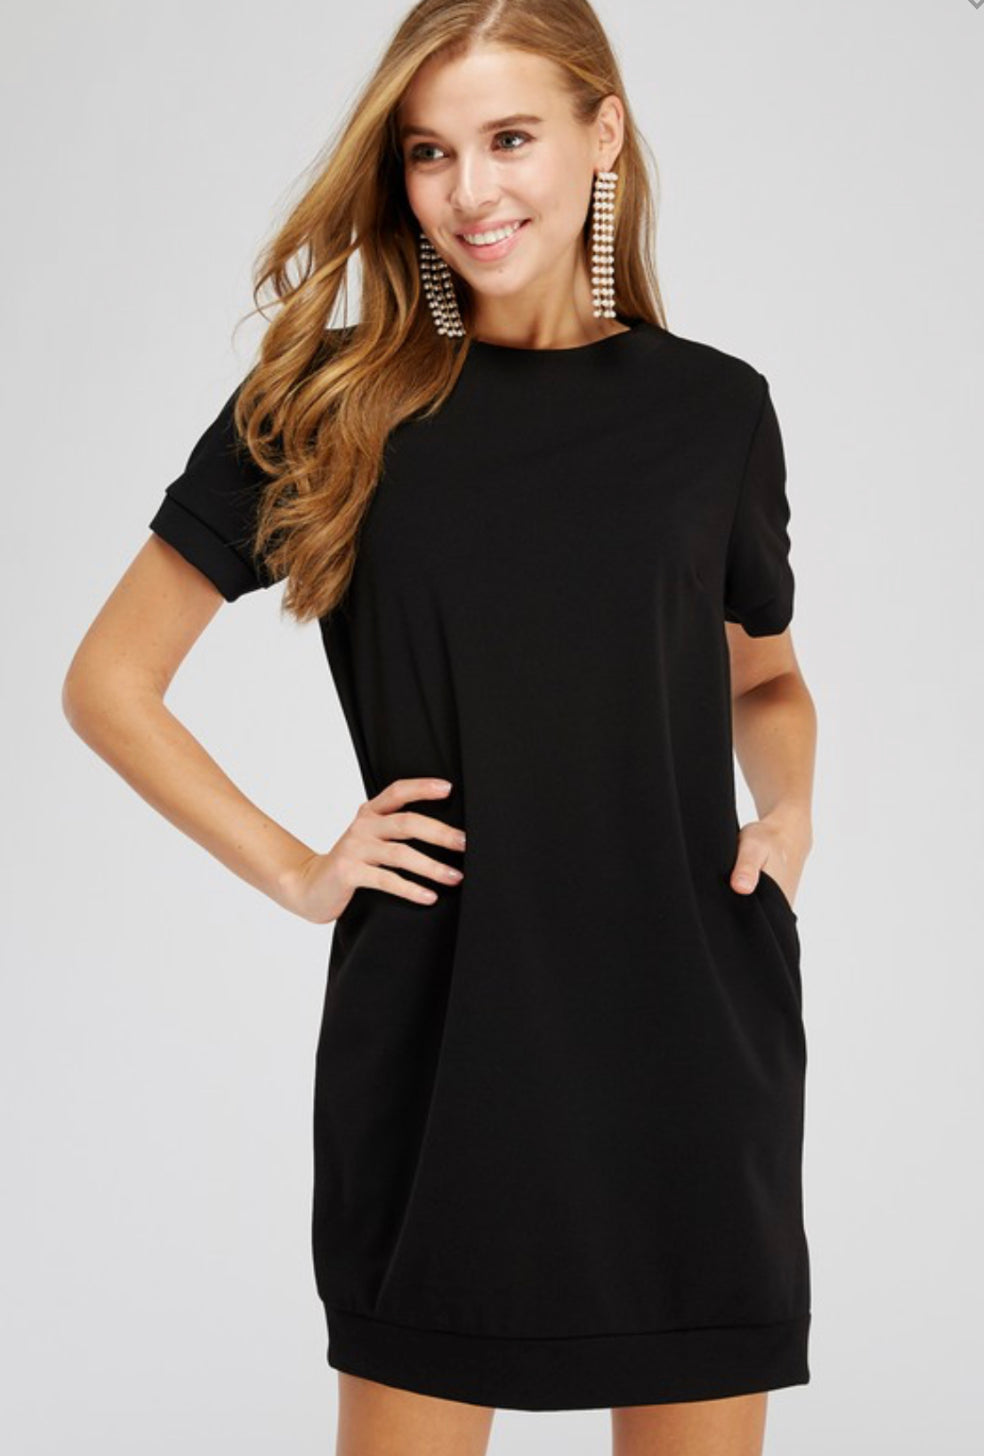 Black Short Sleeve Solid Dress